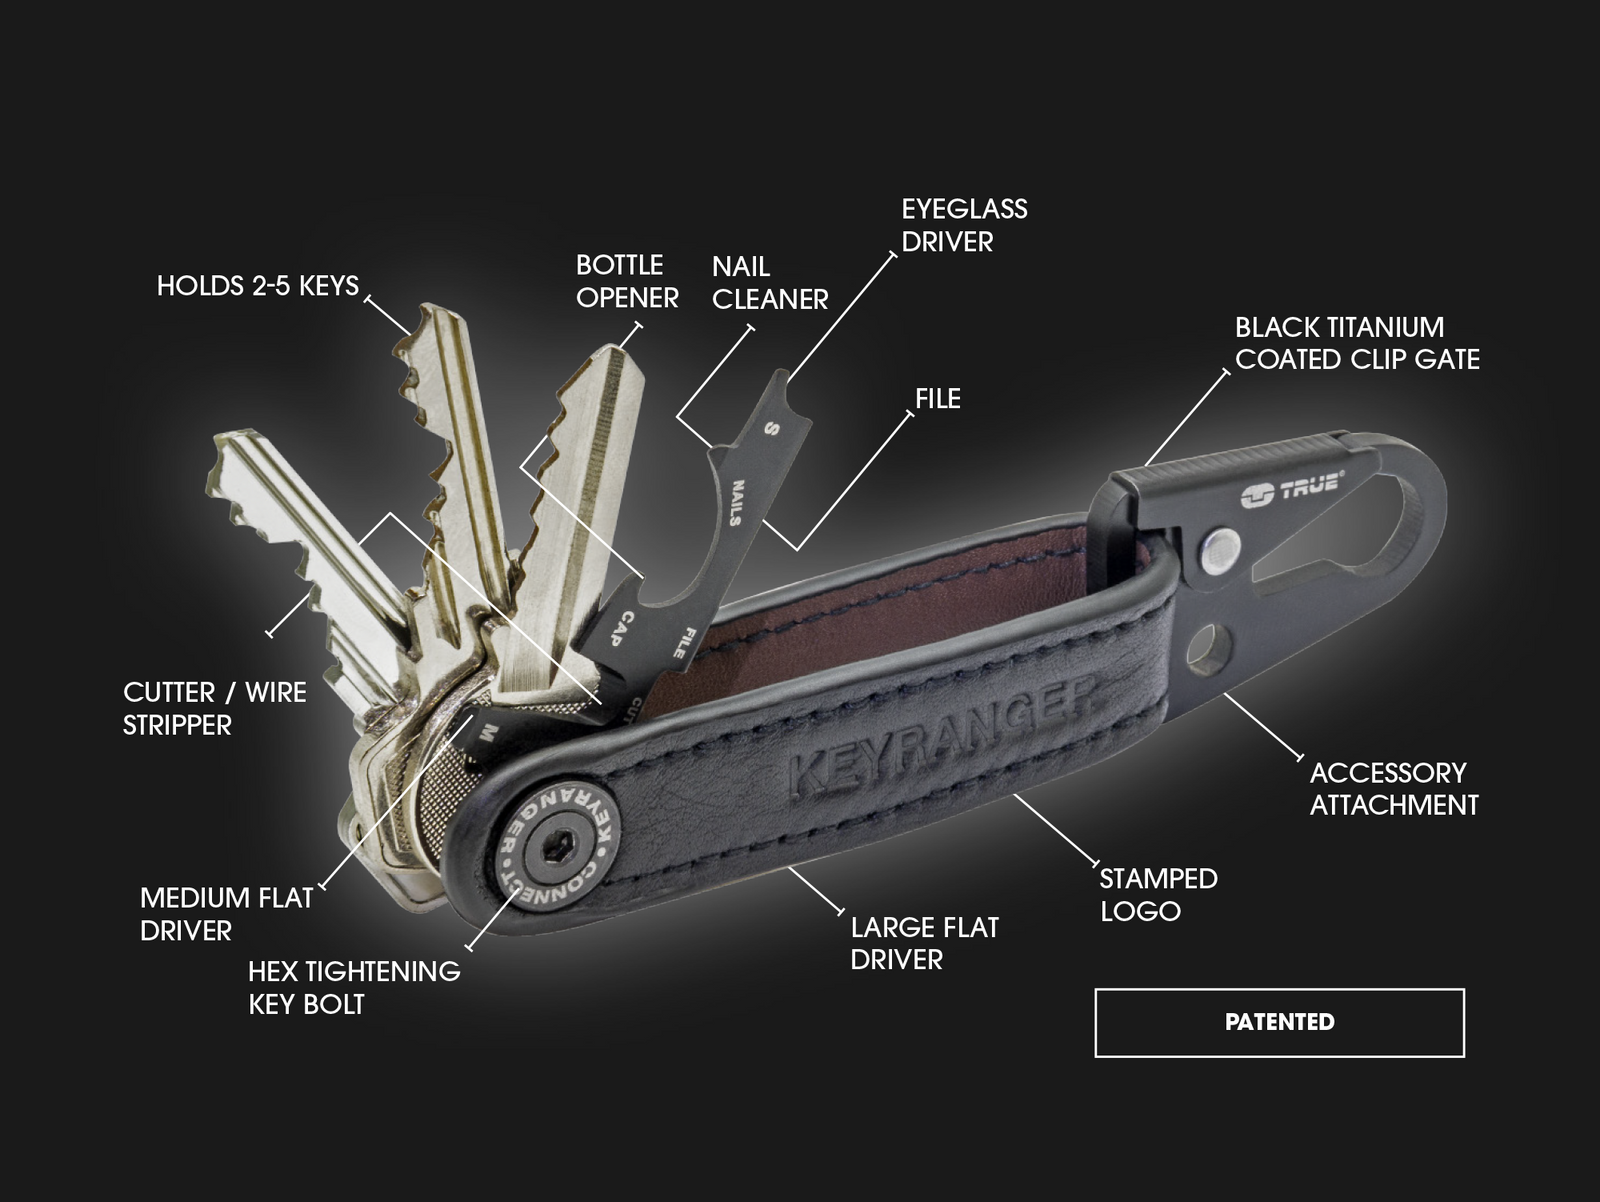 True Utility Keyranger | clip on leather strap key organiser, with screwdriver, bottle opener and file.